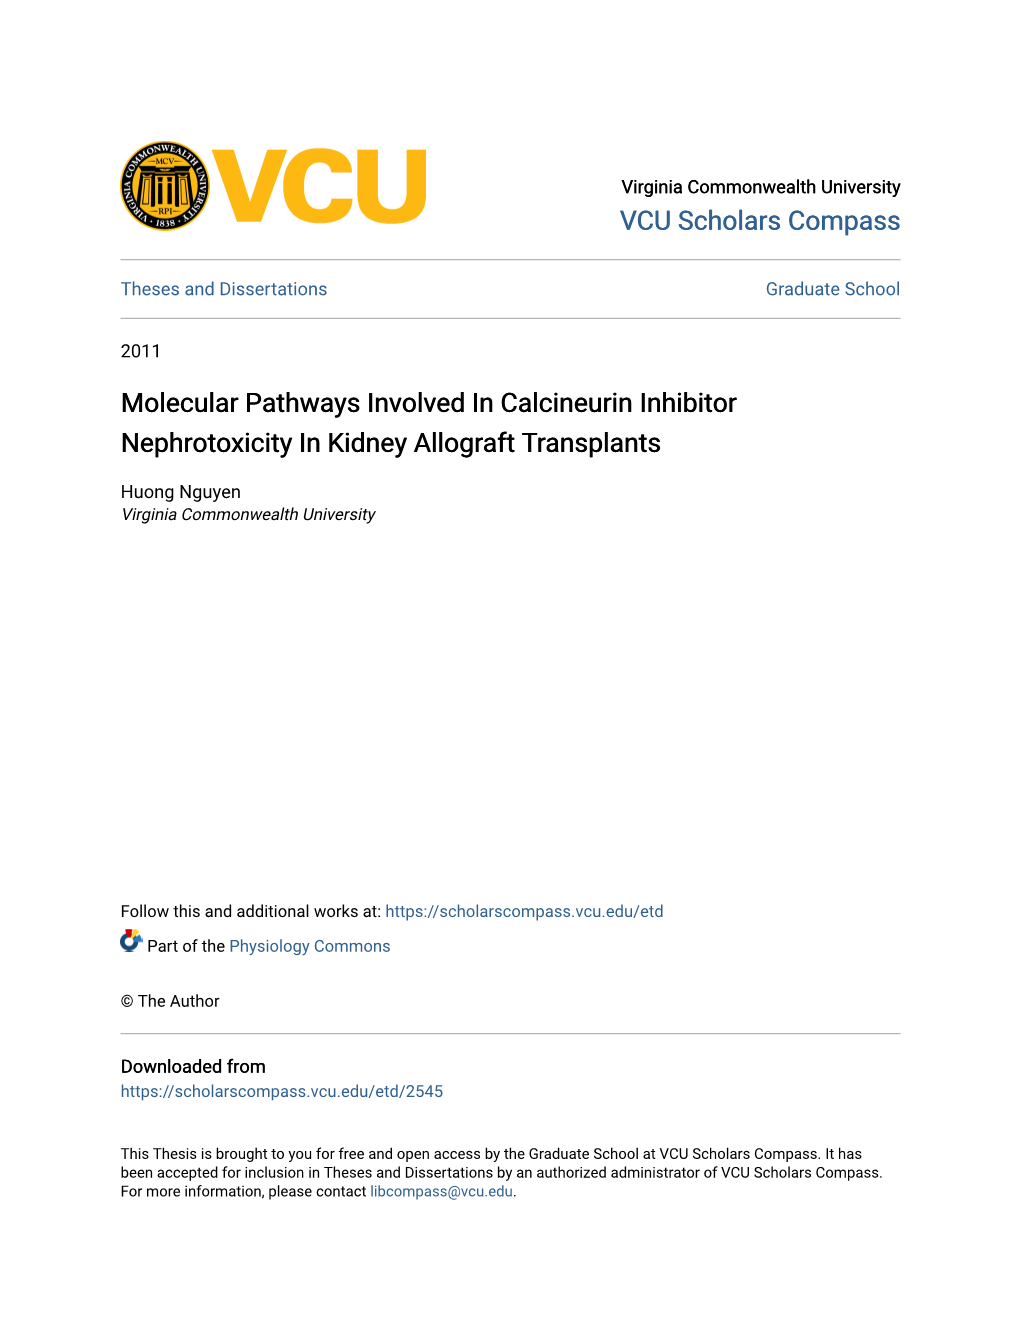 Molecular Pathways Involved in Calcineurin Inhibitor Nephrotoxicity in Kidney Allograft Transplants